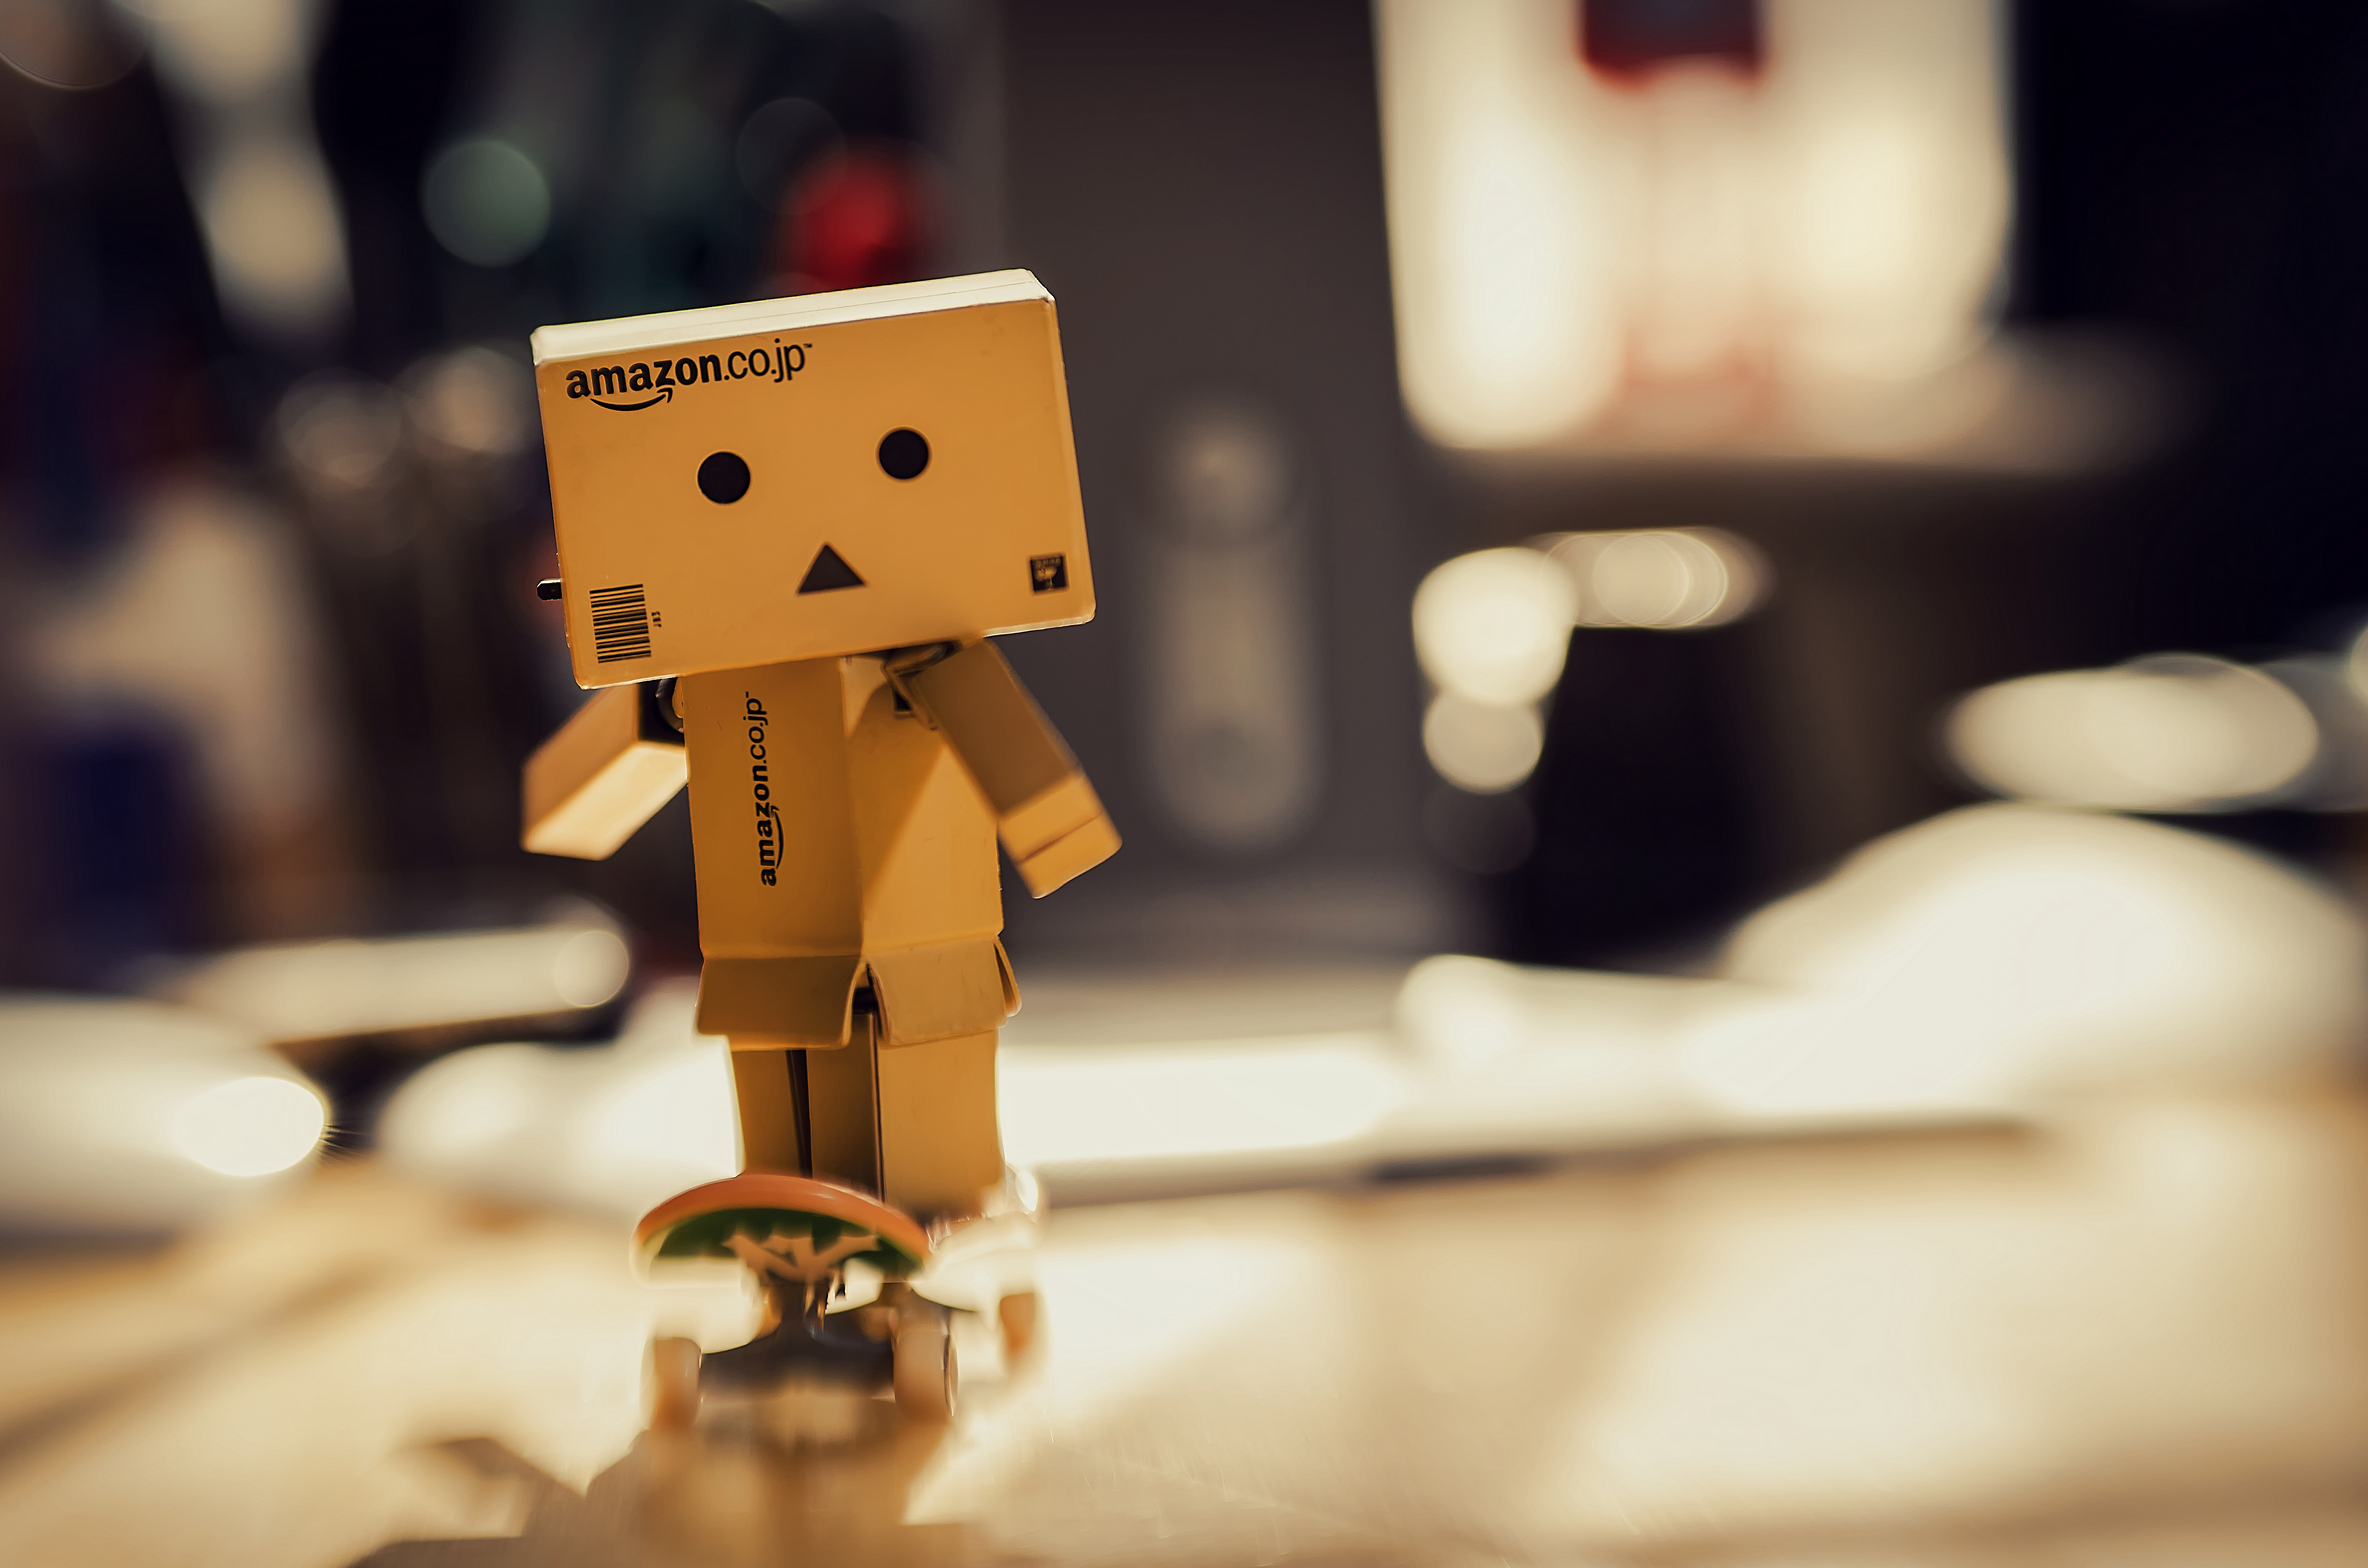 cardboard robot, miscellanea, miscellaneous, danbo, skateboard